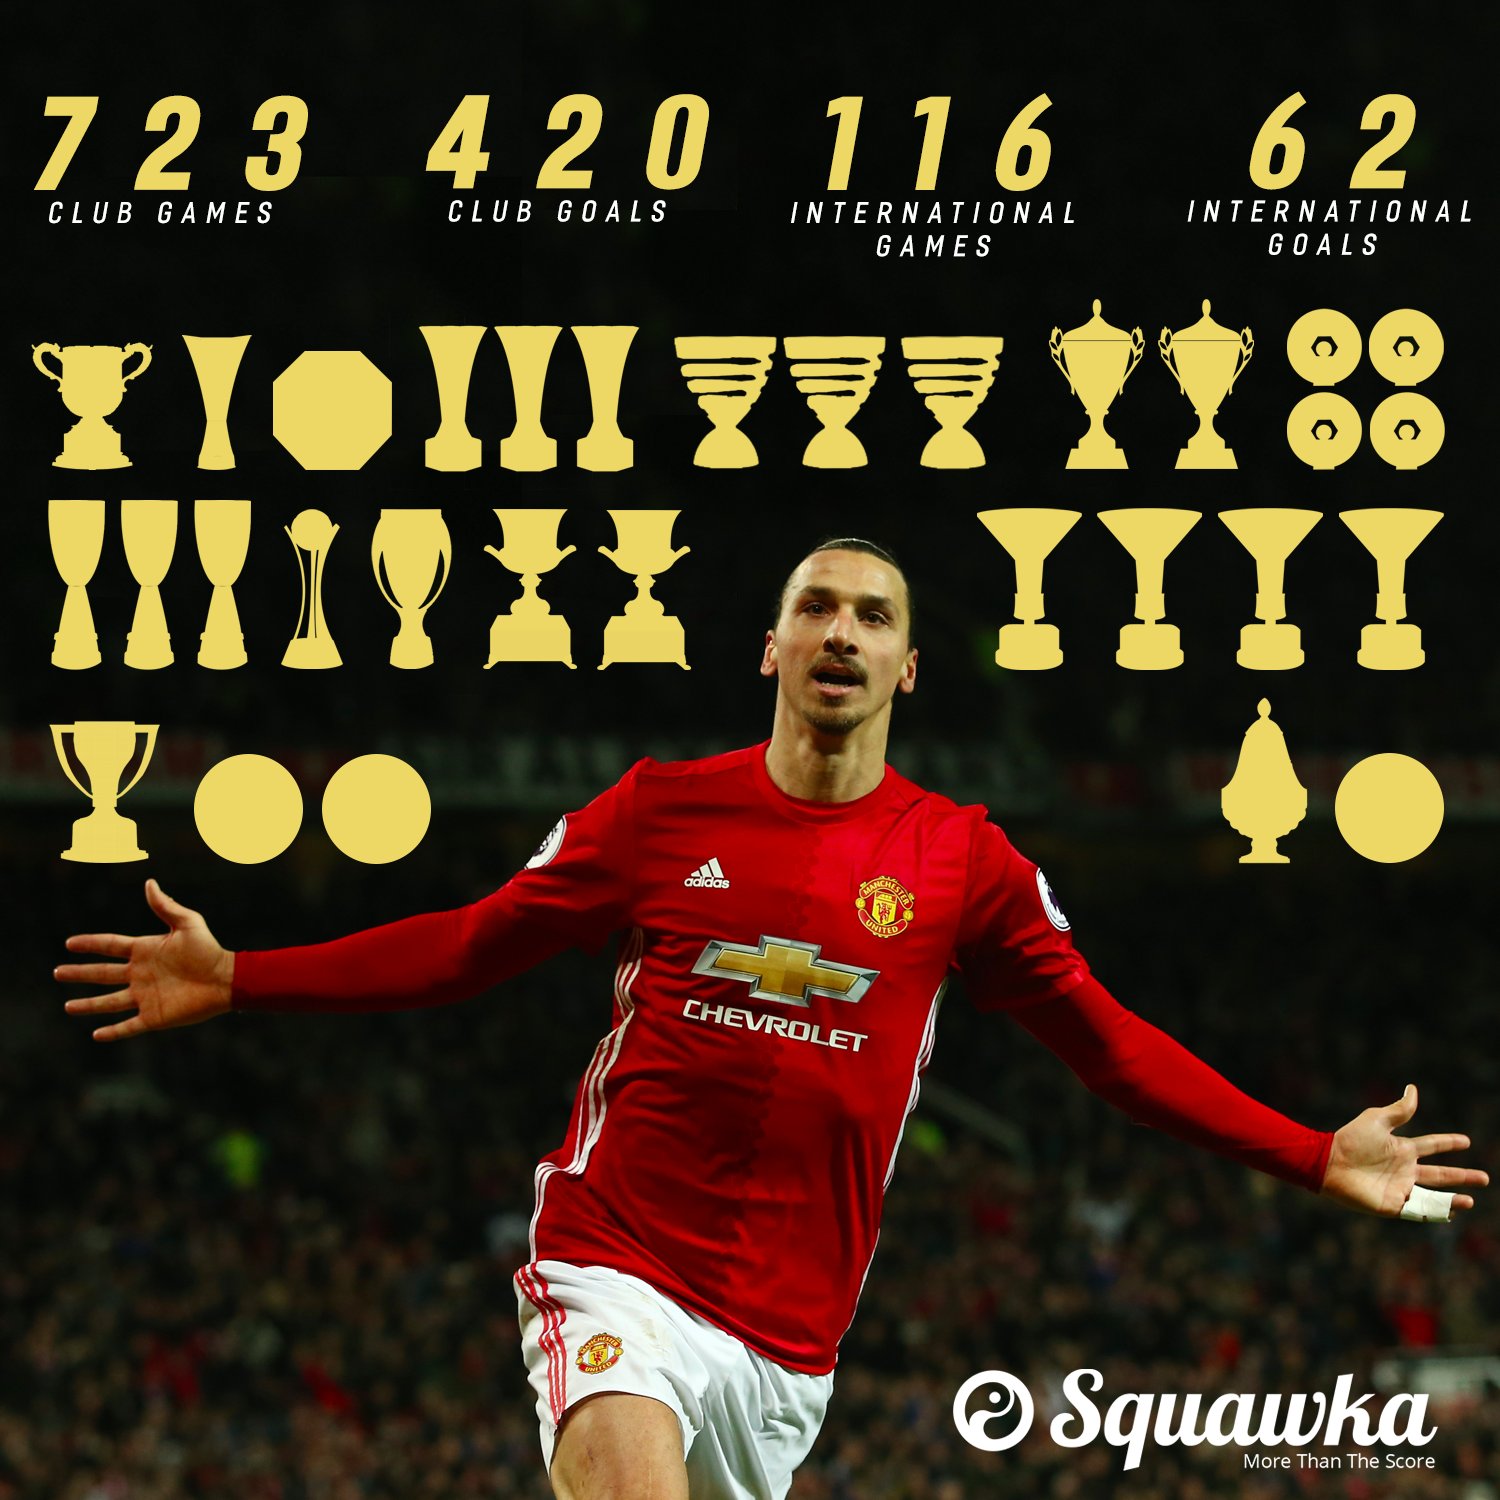 Happy 36th birthday to Zlatan Ibrahimovic. 

723 games 420 goals 116 caps  31 trophies Medical marvel. 